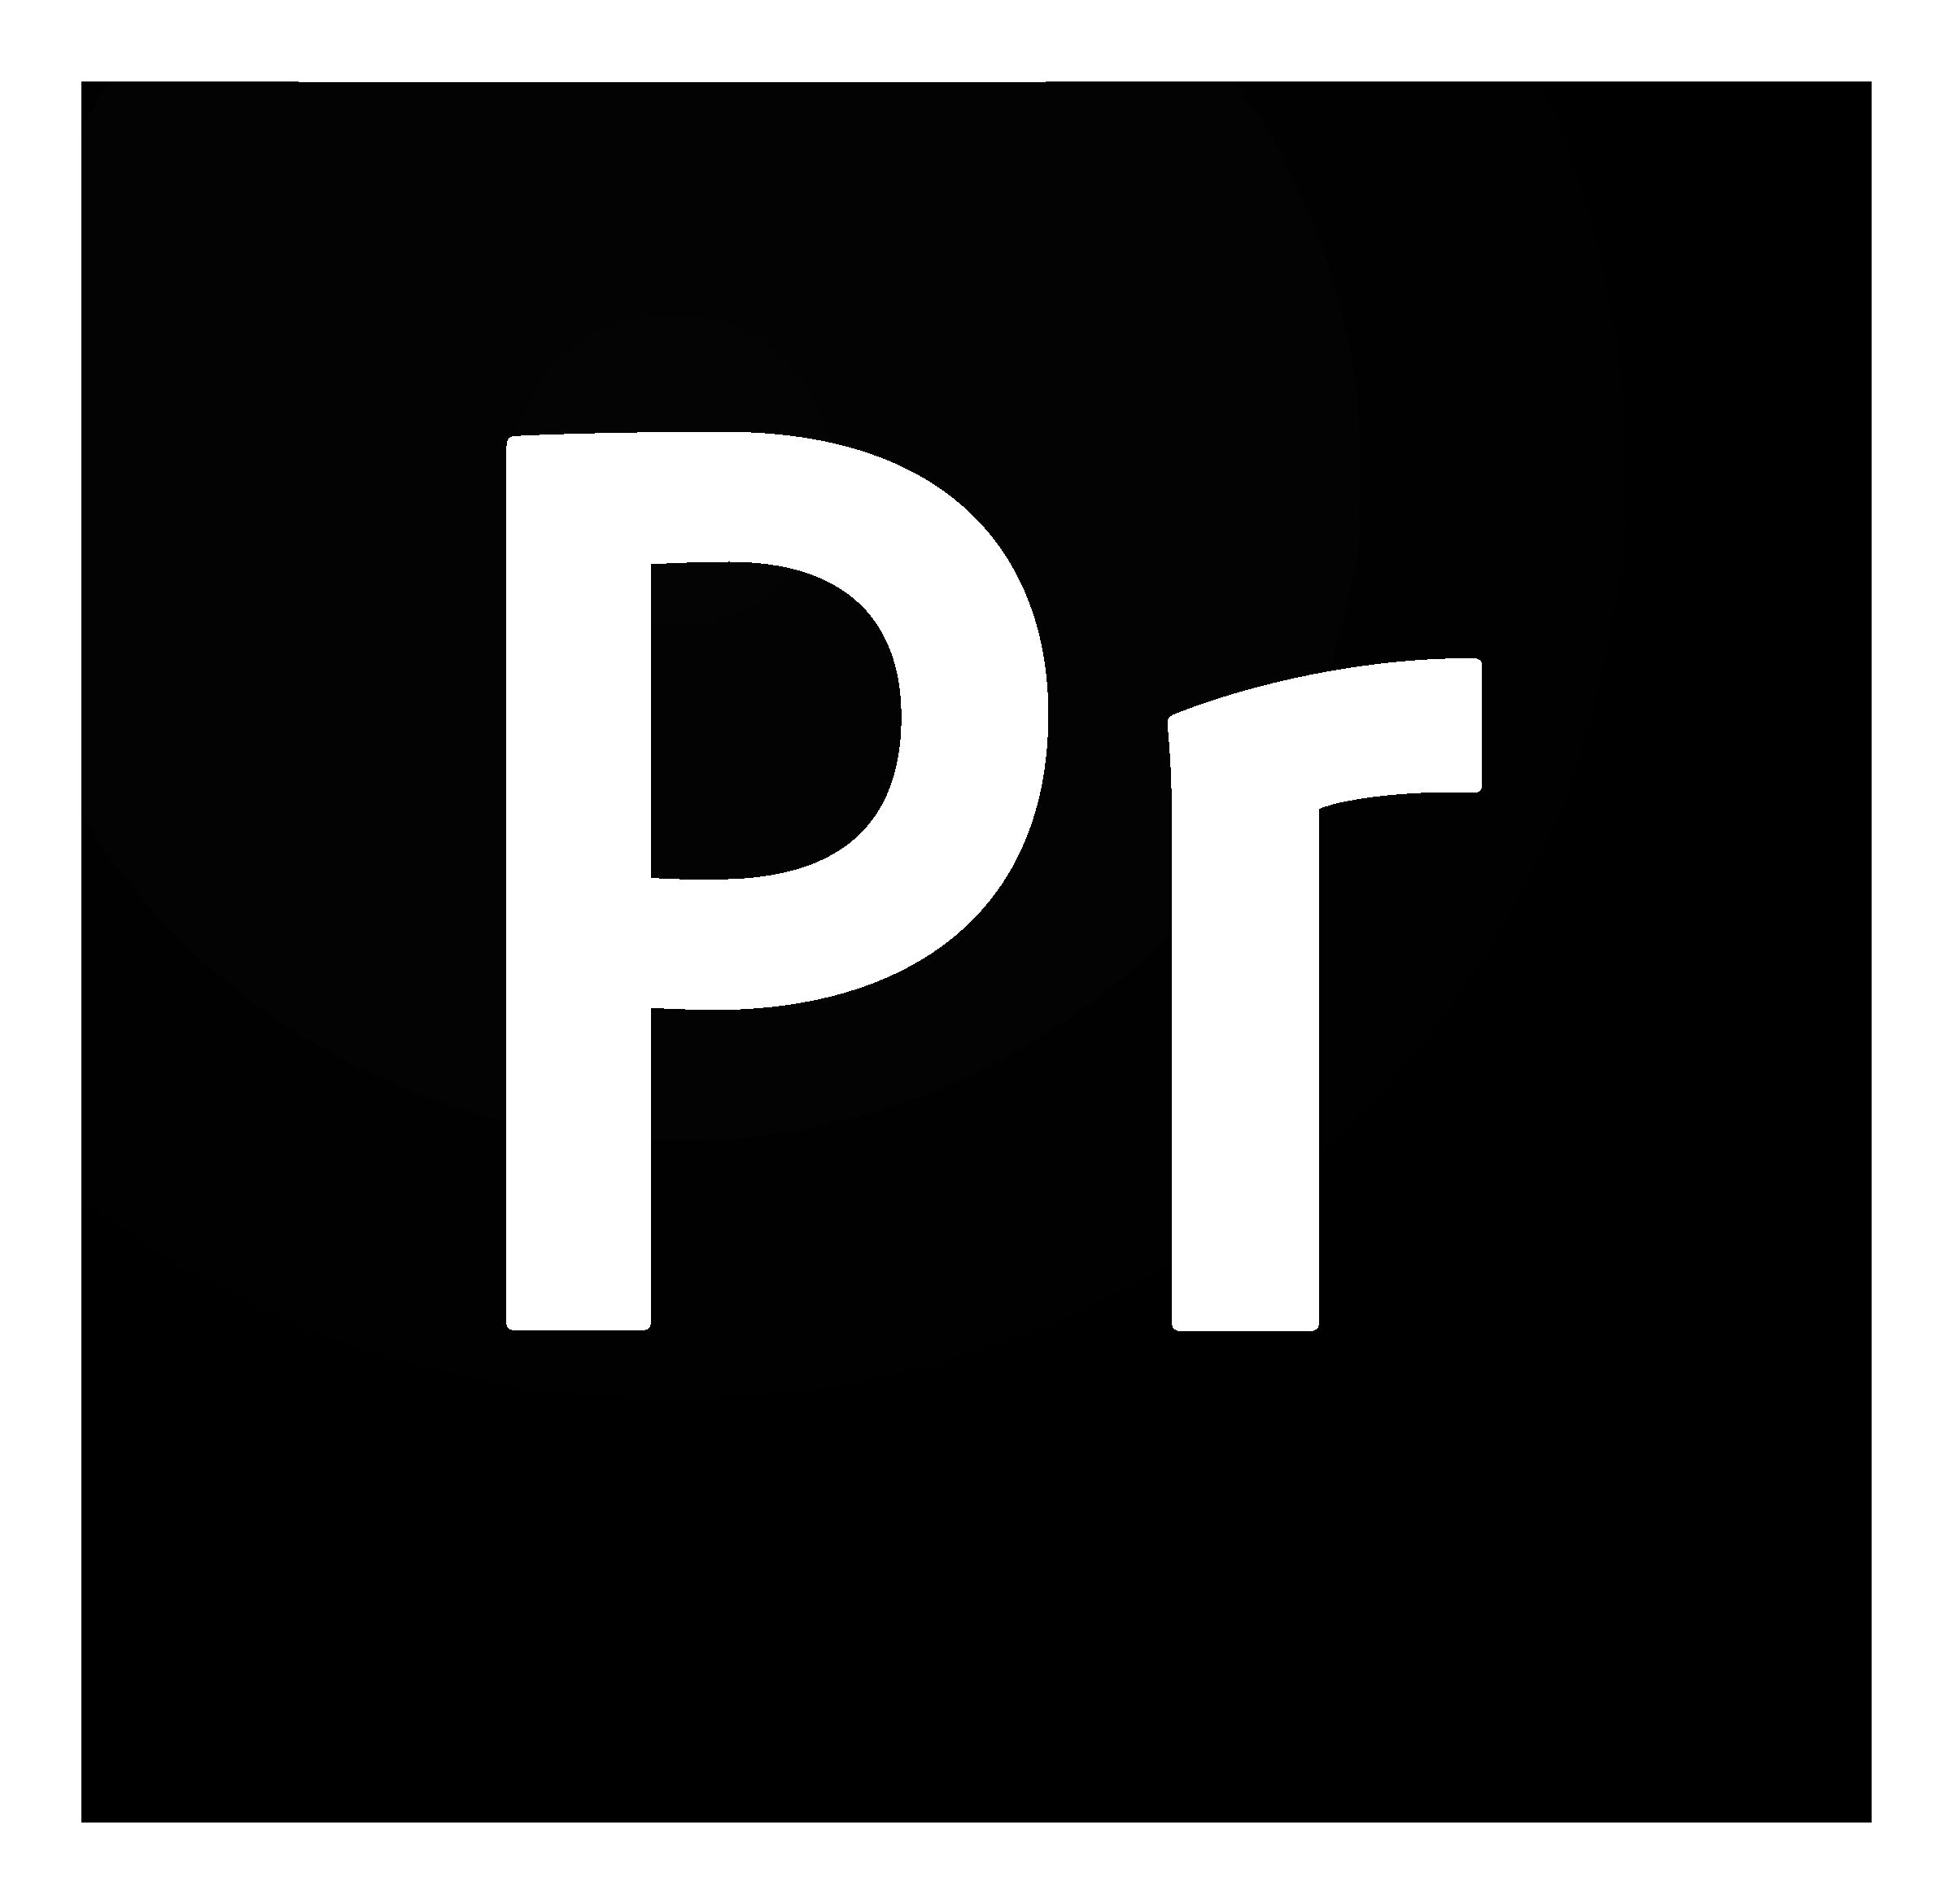 CC and White Logo - Premiere Pro CC Logo PNG Transparent & SVG Vector - Freebie Supply